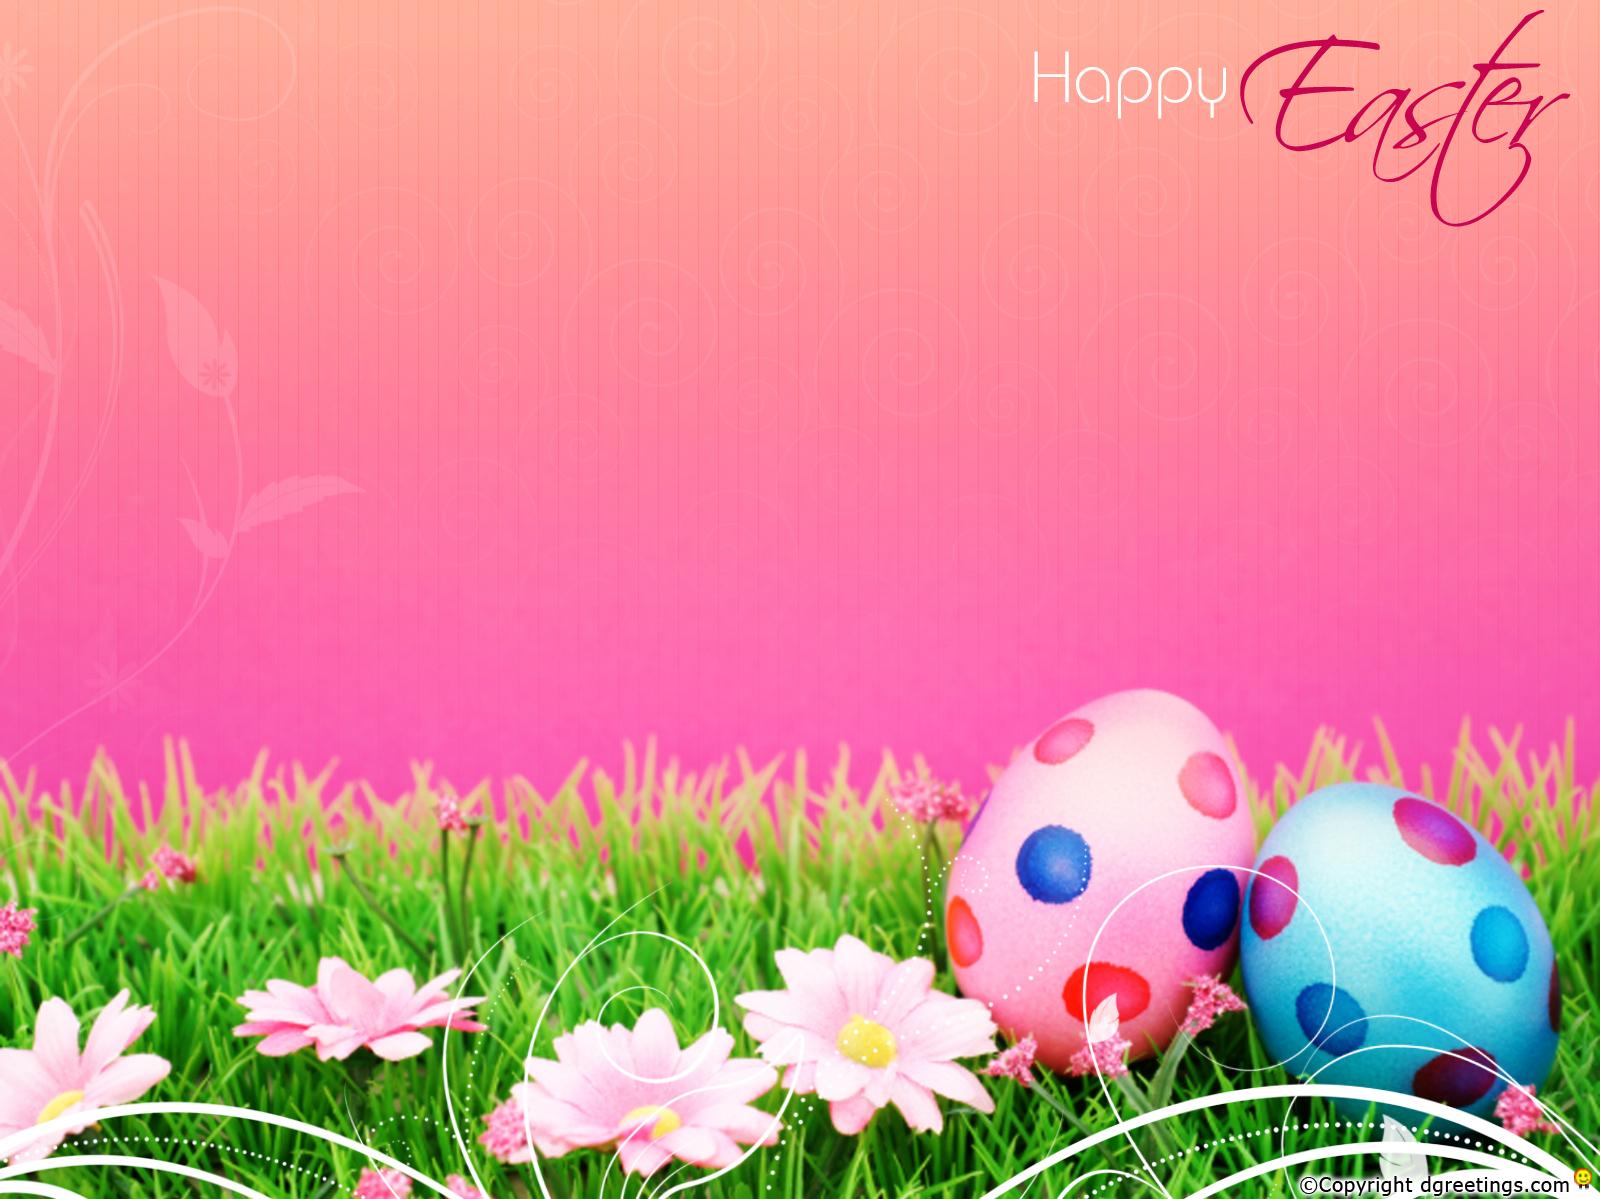 Free download Happy Easter Desktop Backgrounds Free Christian